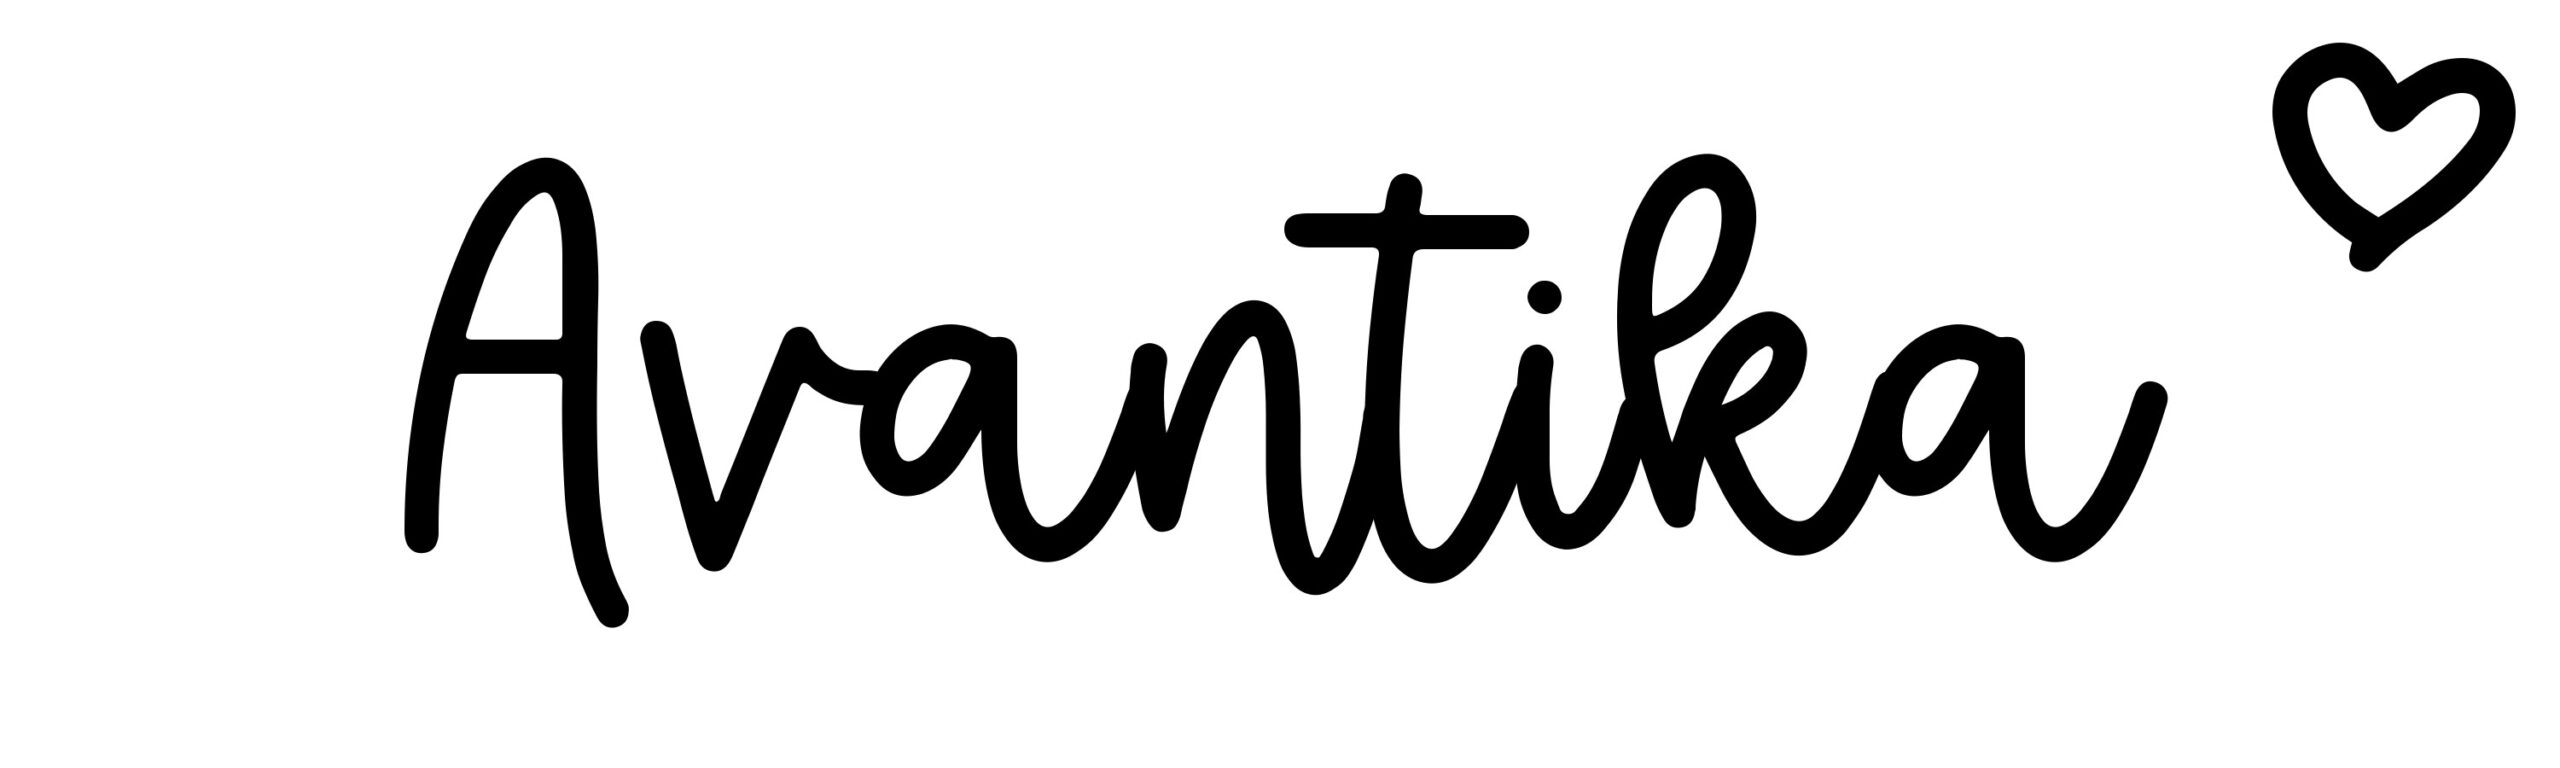 Avantika - Name meaning, origin, variations and more